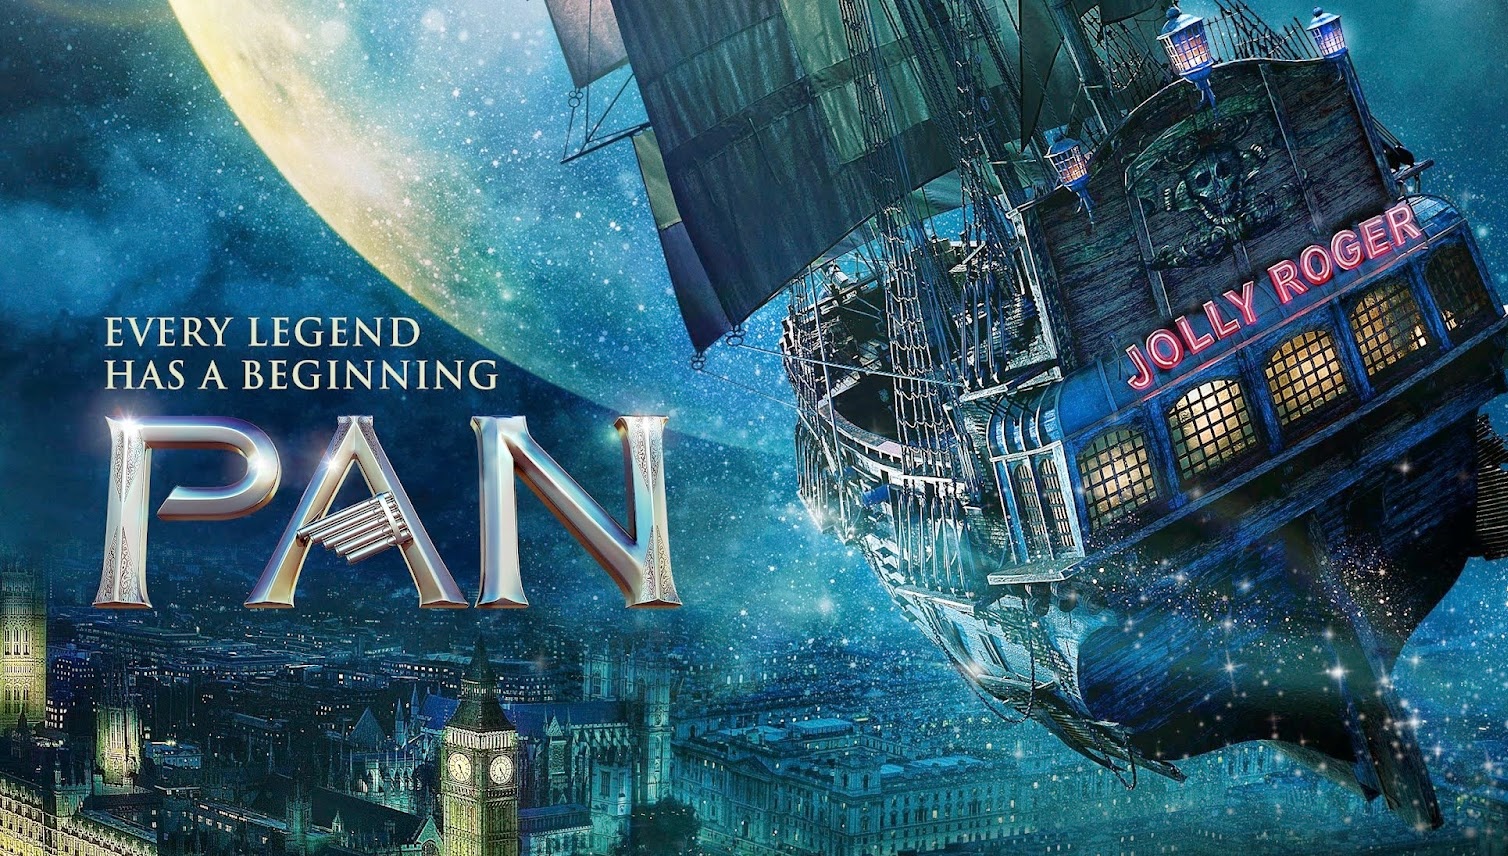 Movie Review: “Pan”